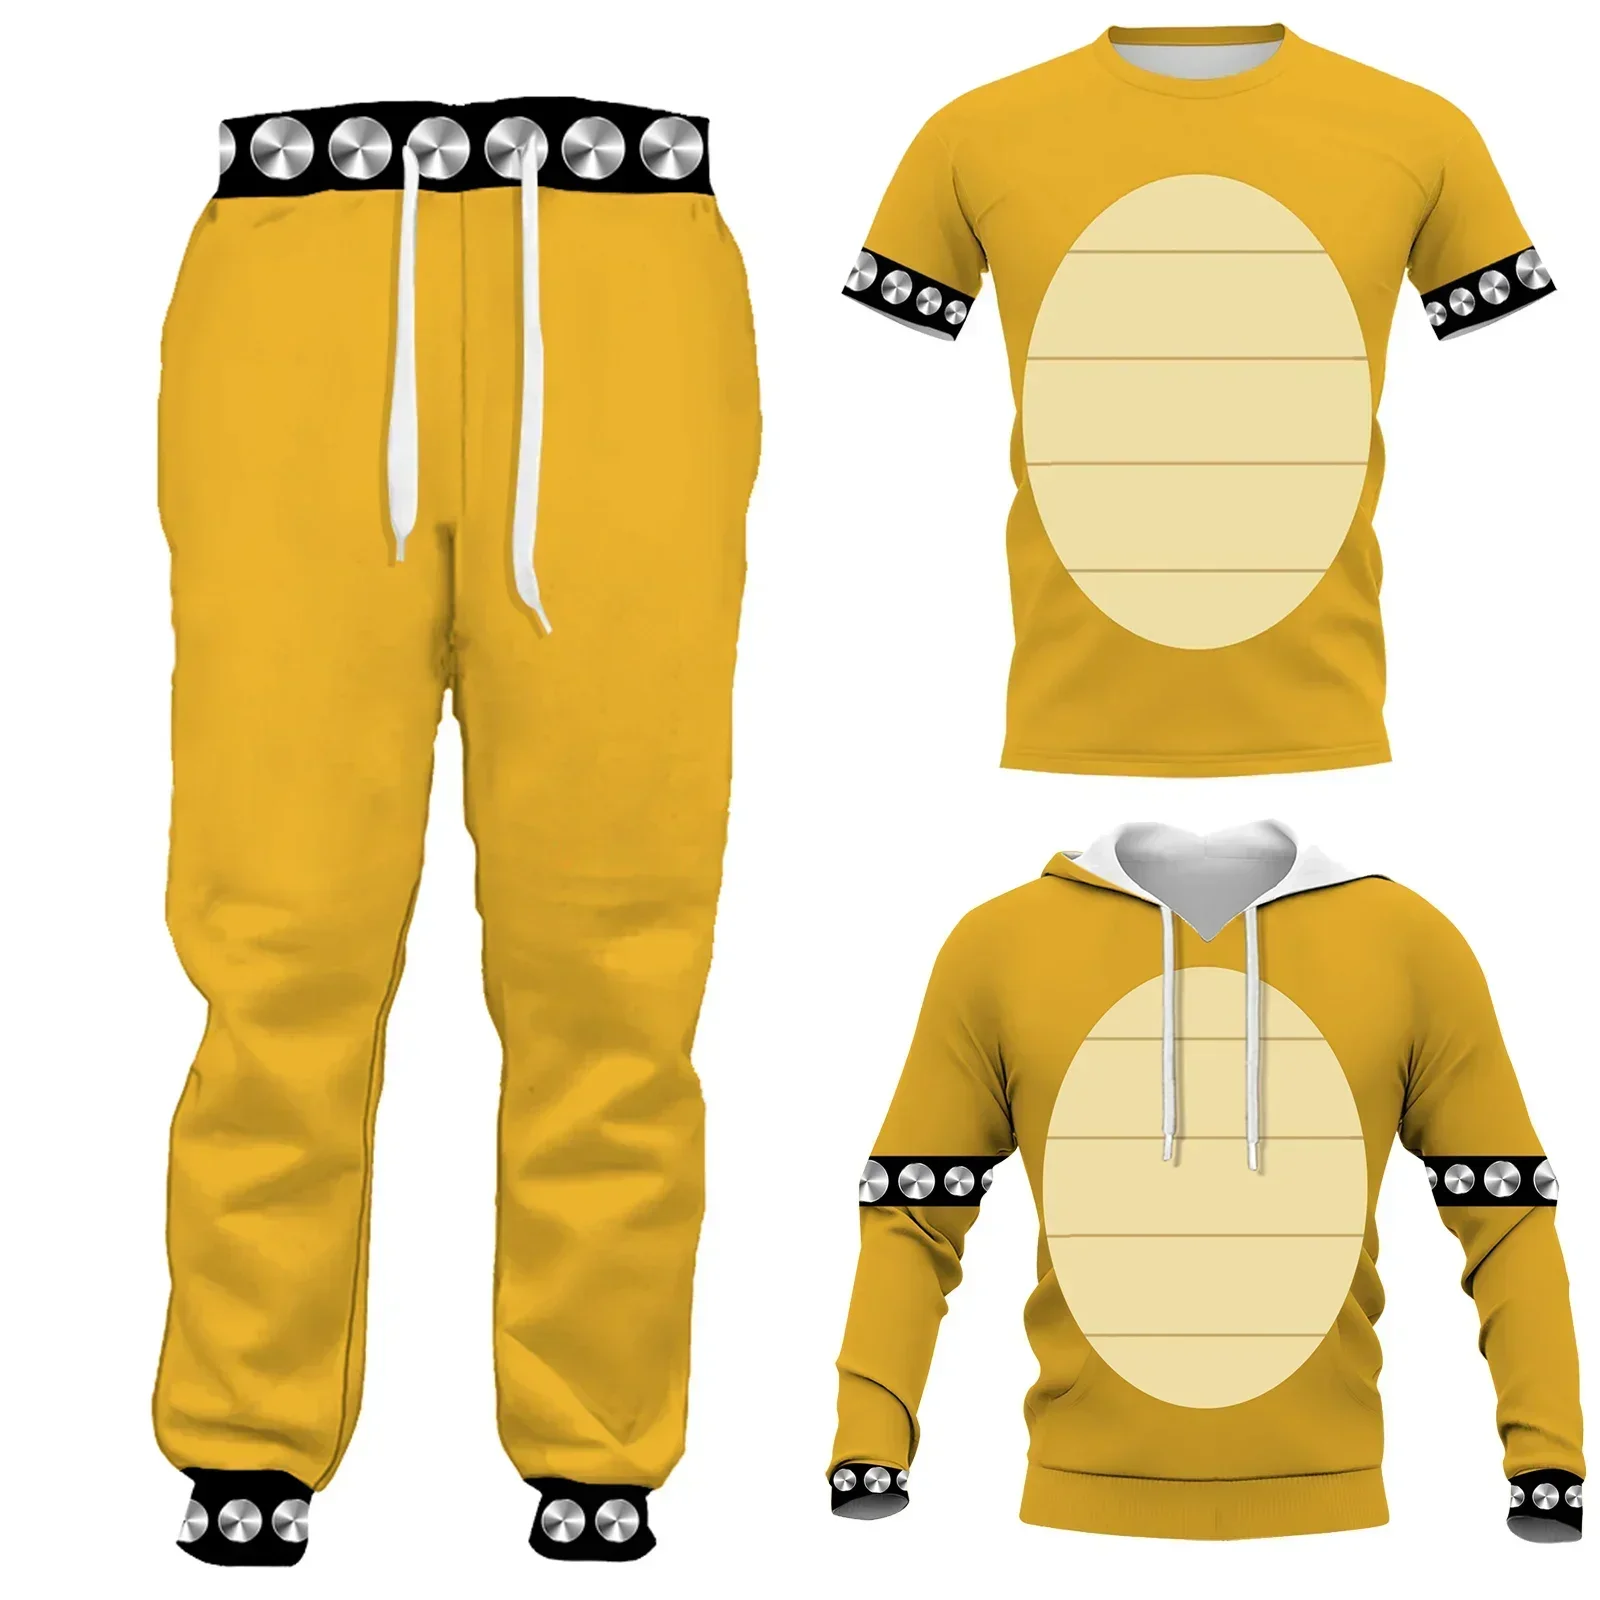 HX Cartoon Bowser Clothing 3D Printed Vest T-shirts Shorts Sweatshirts Hoodies Pants Male Female Cosplay Costumes Dropshipping